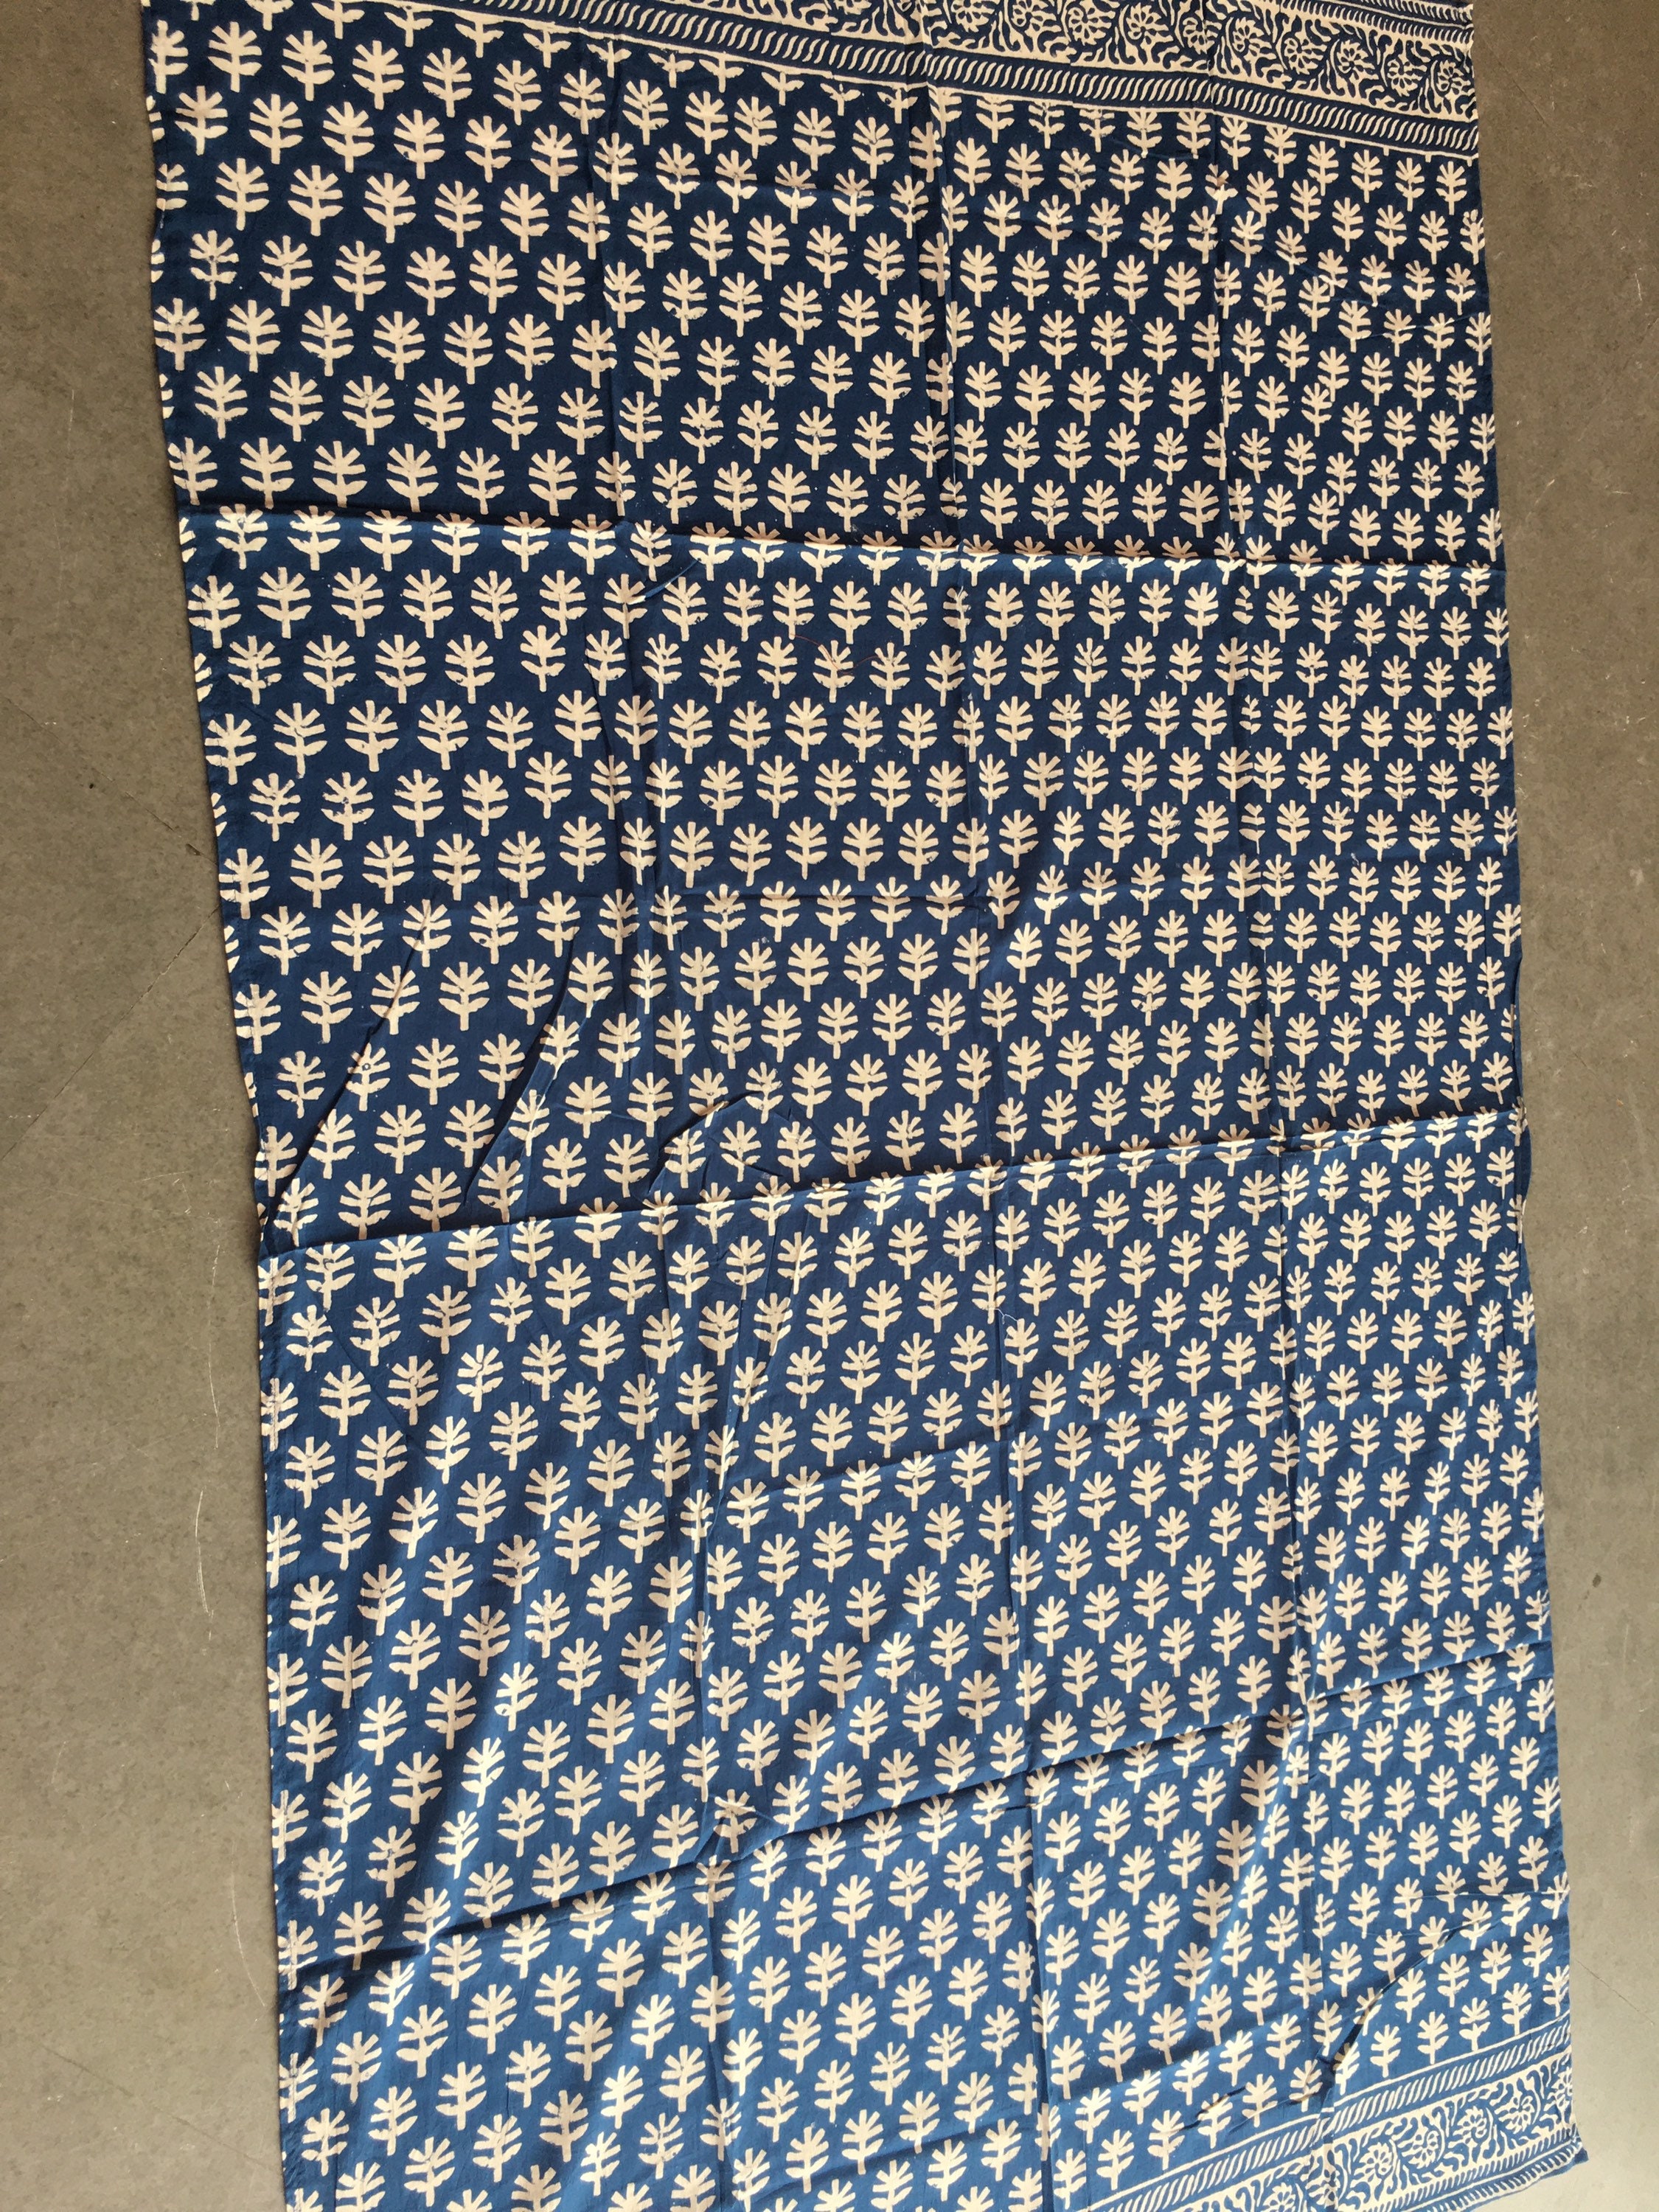 Indigo Blue Color Indian Hand Block Print Scarves Handmade | Etsy